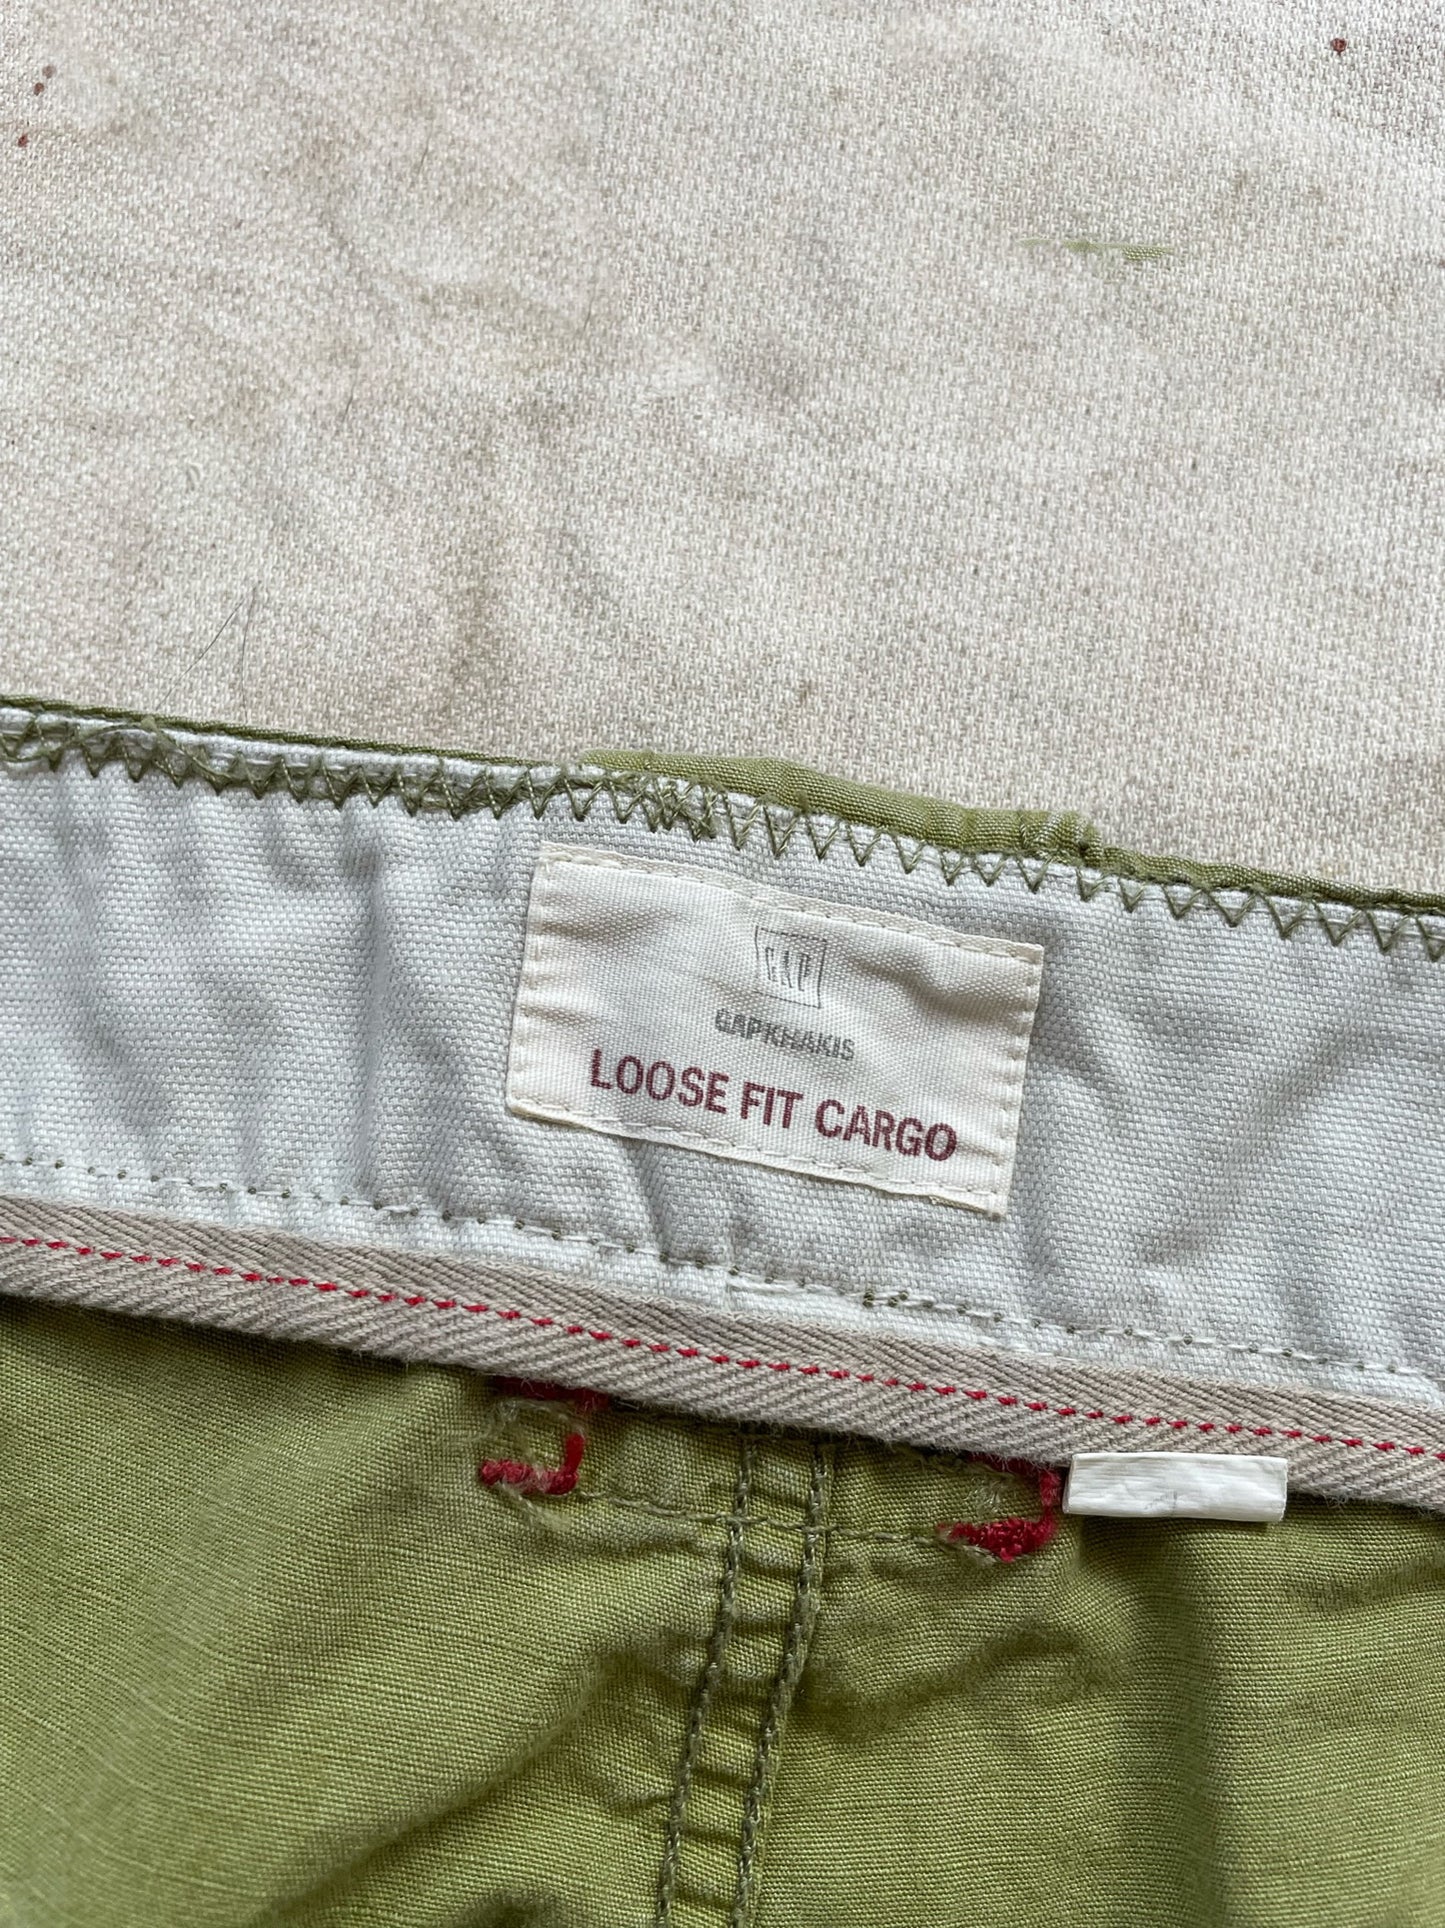 Gap Loose Fit Cargo Pants—[38x30]